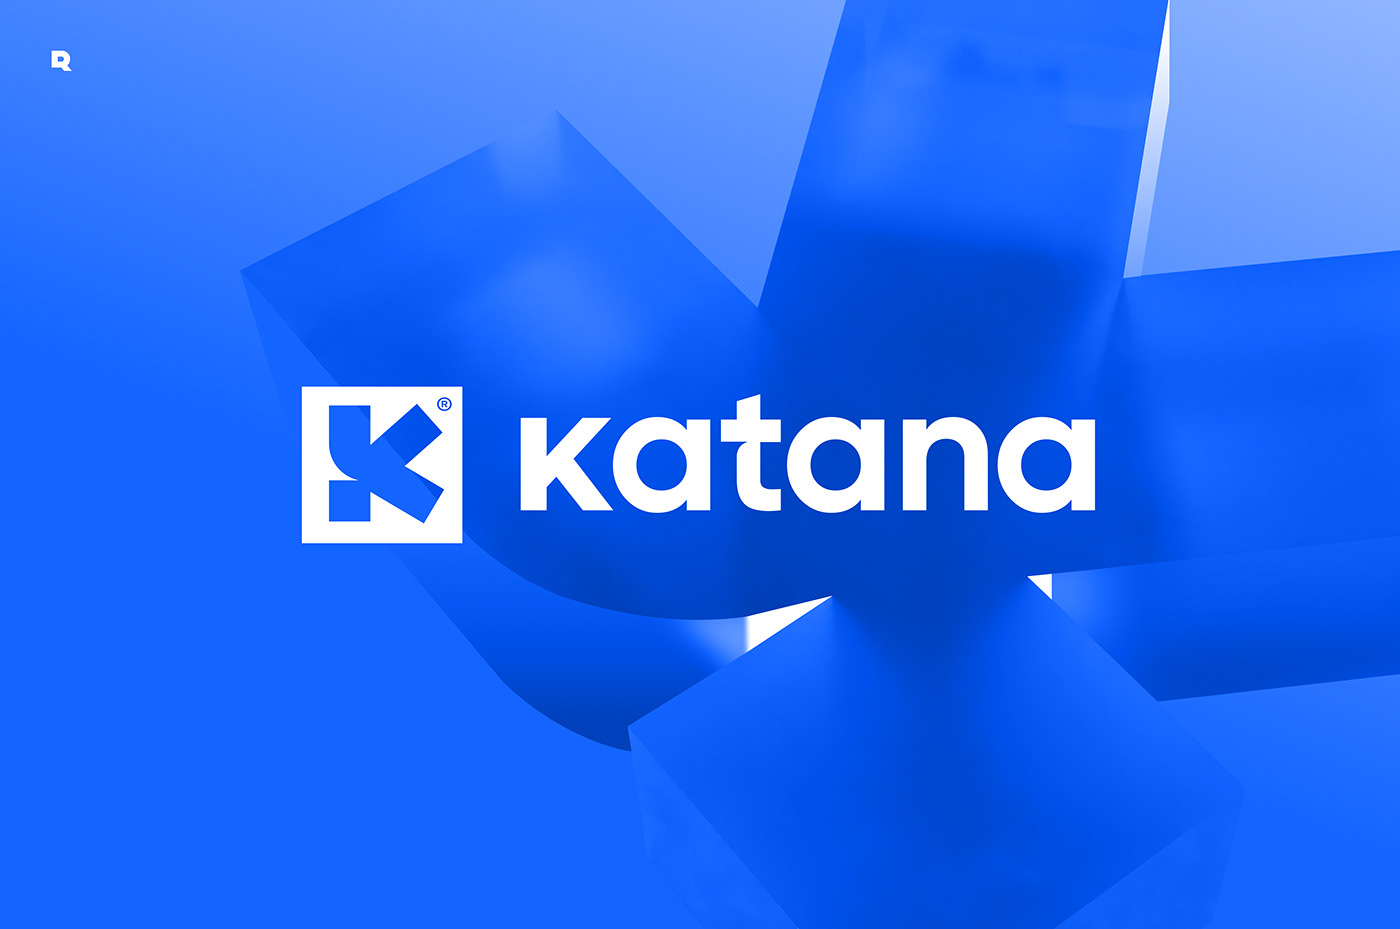 Katana - Branding & UX/UI Trial Period